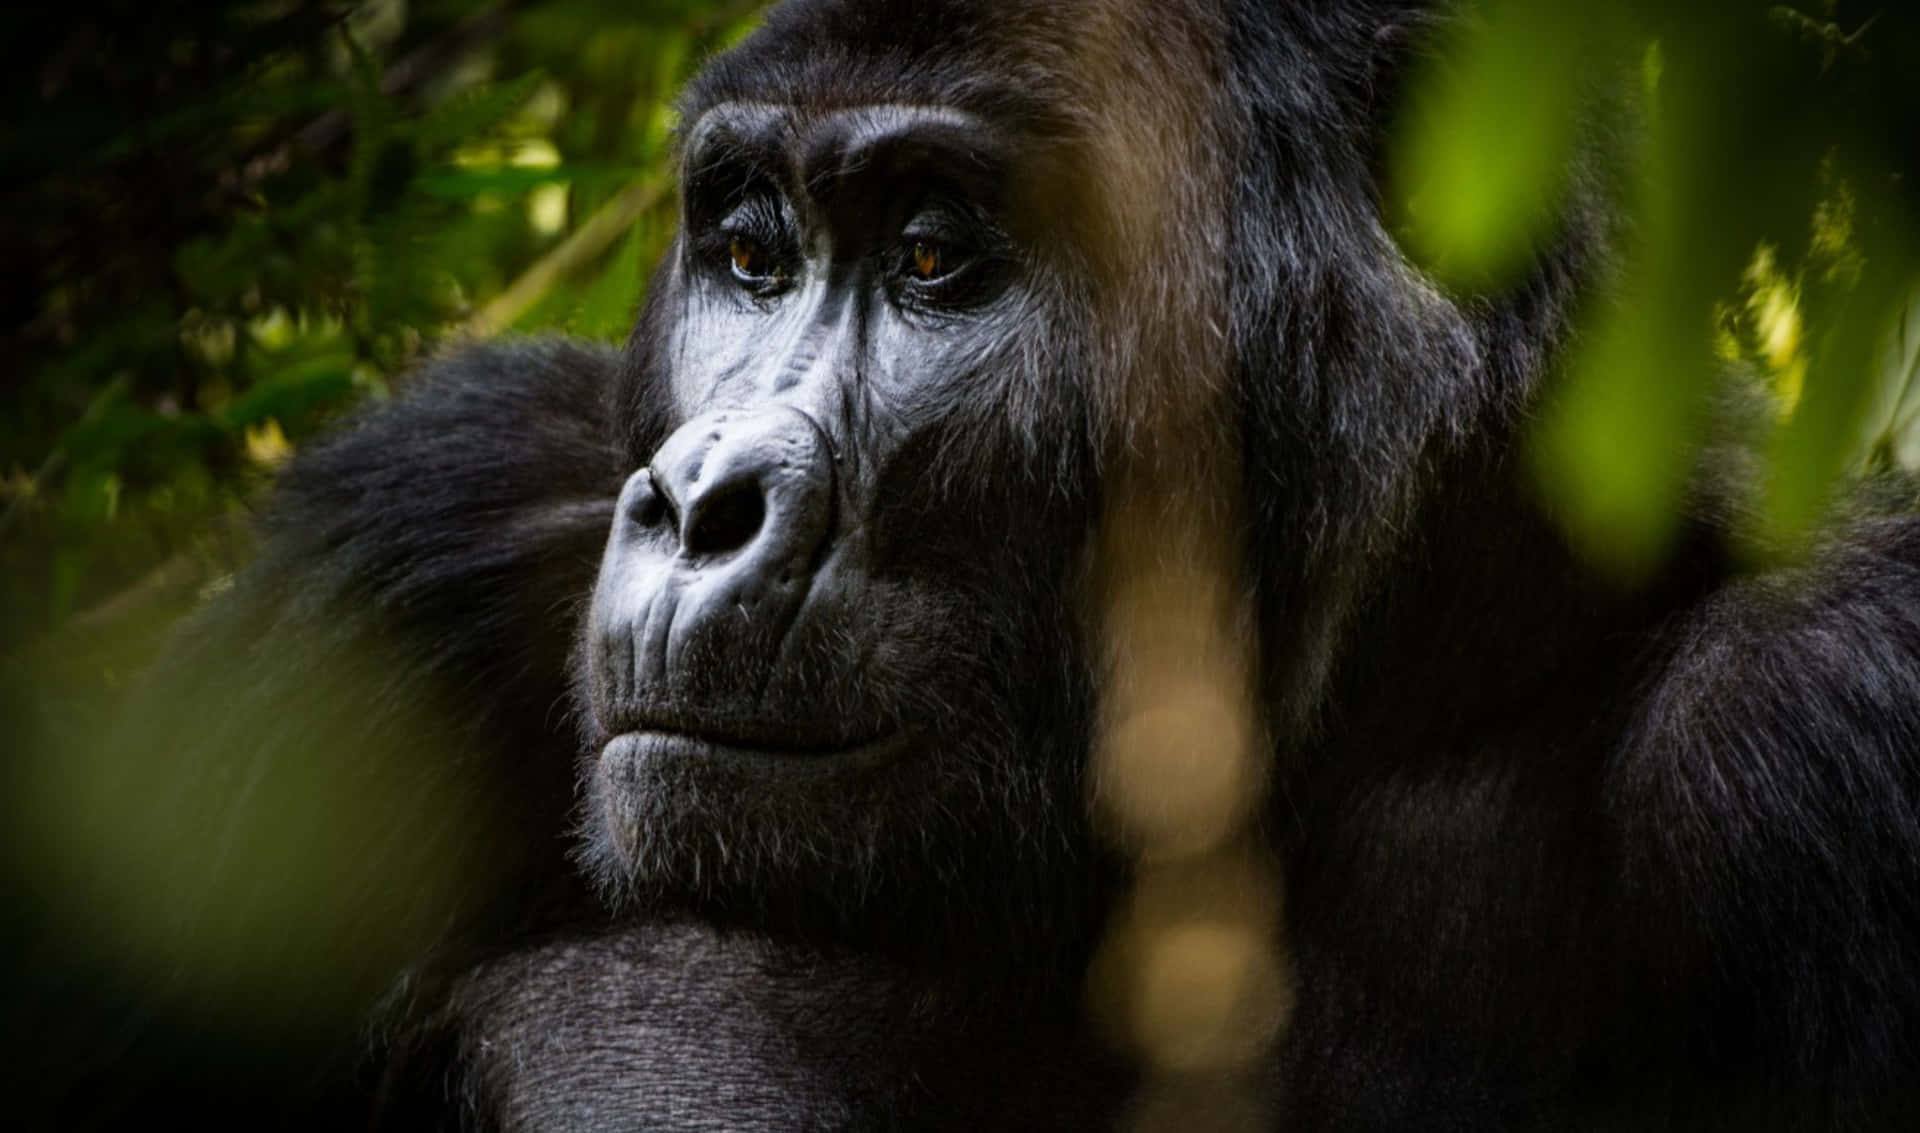 Closeup Portrait Of A Gorilla